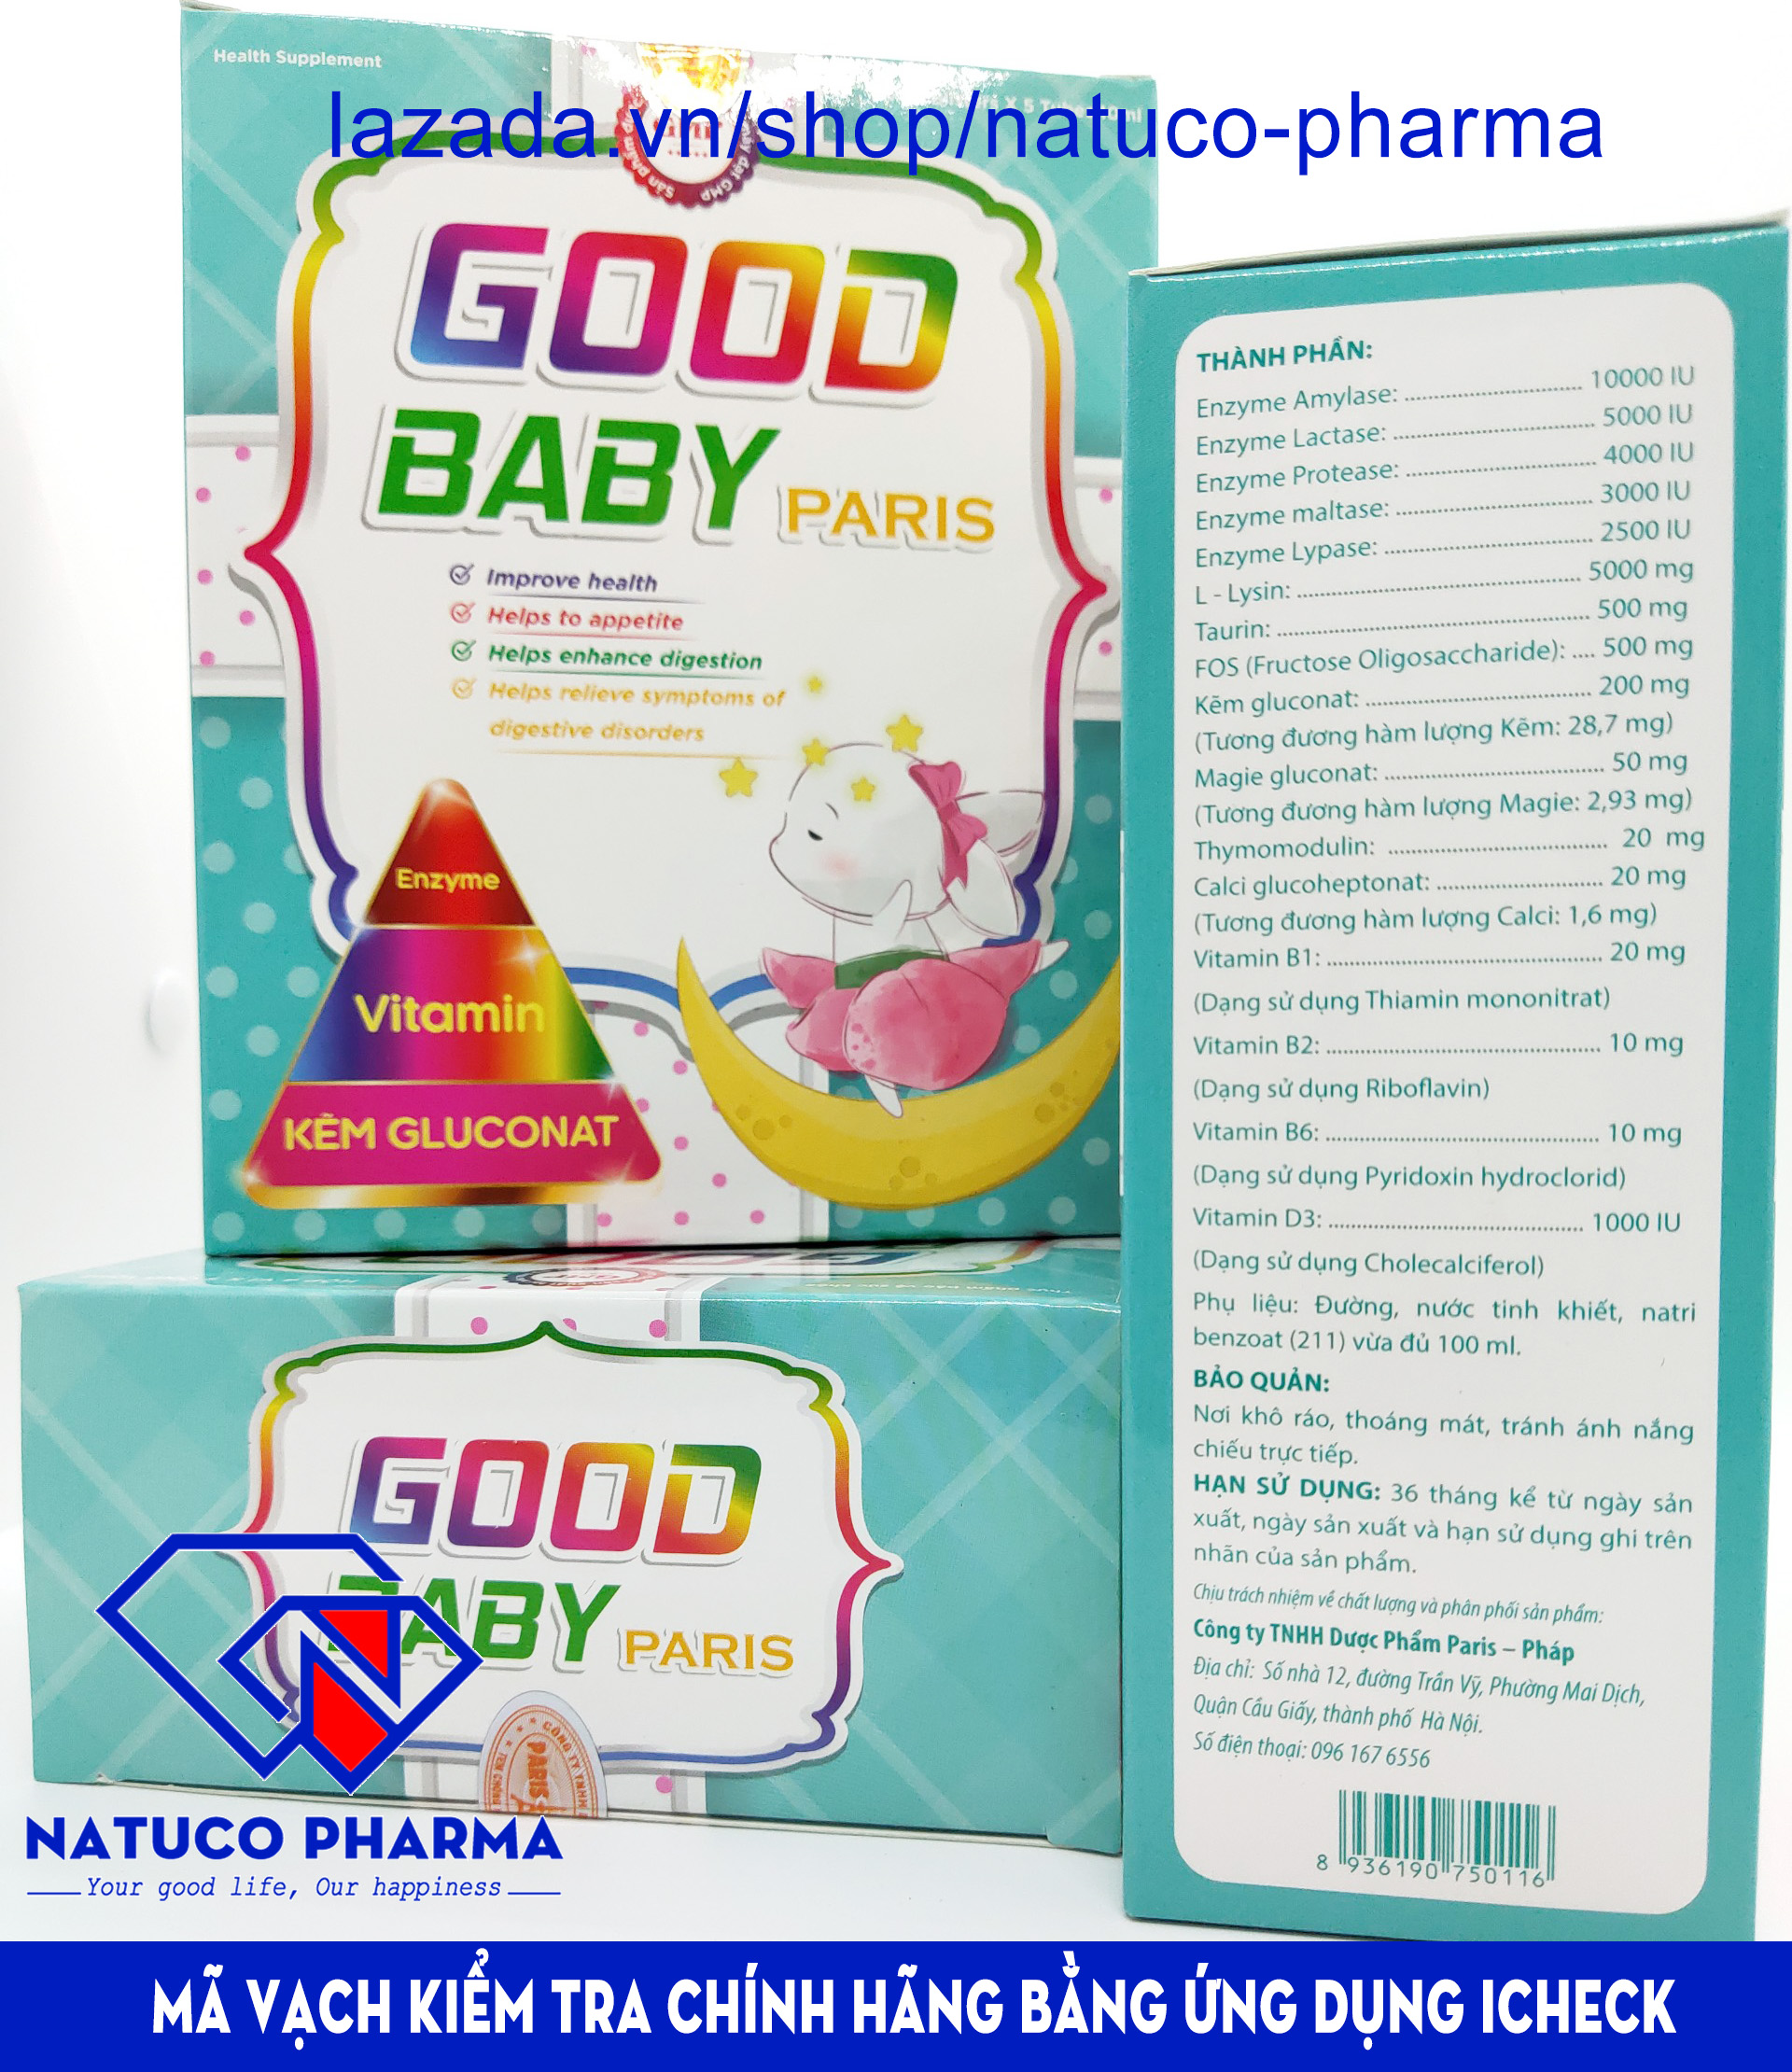 siro giúp bé ăn ngon good baby - paris - bổ sung vitamin, enzyme 3